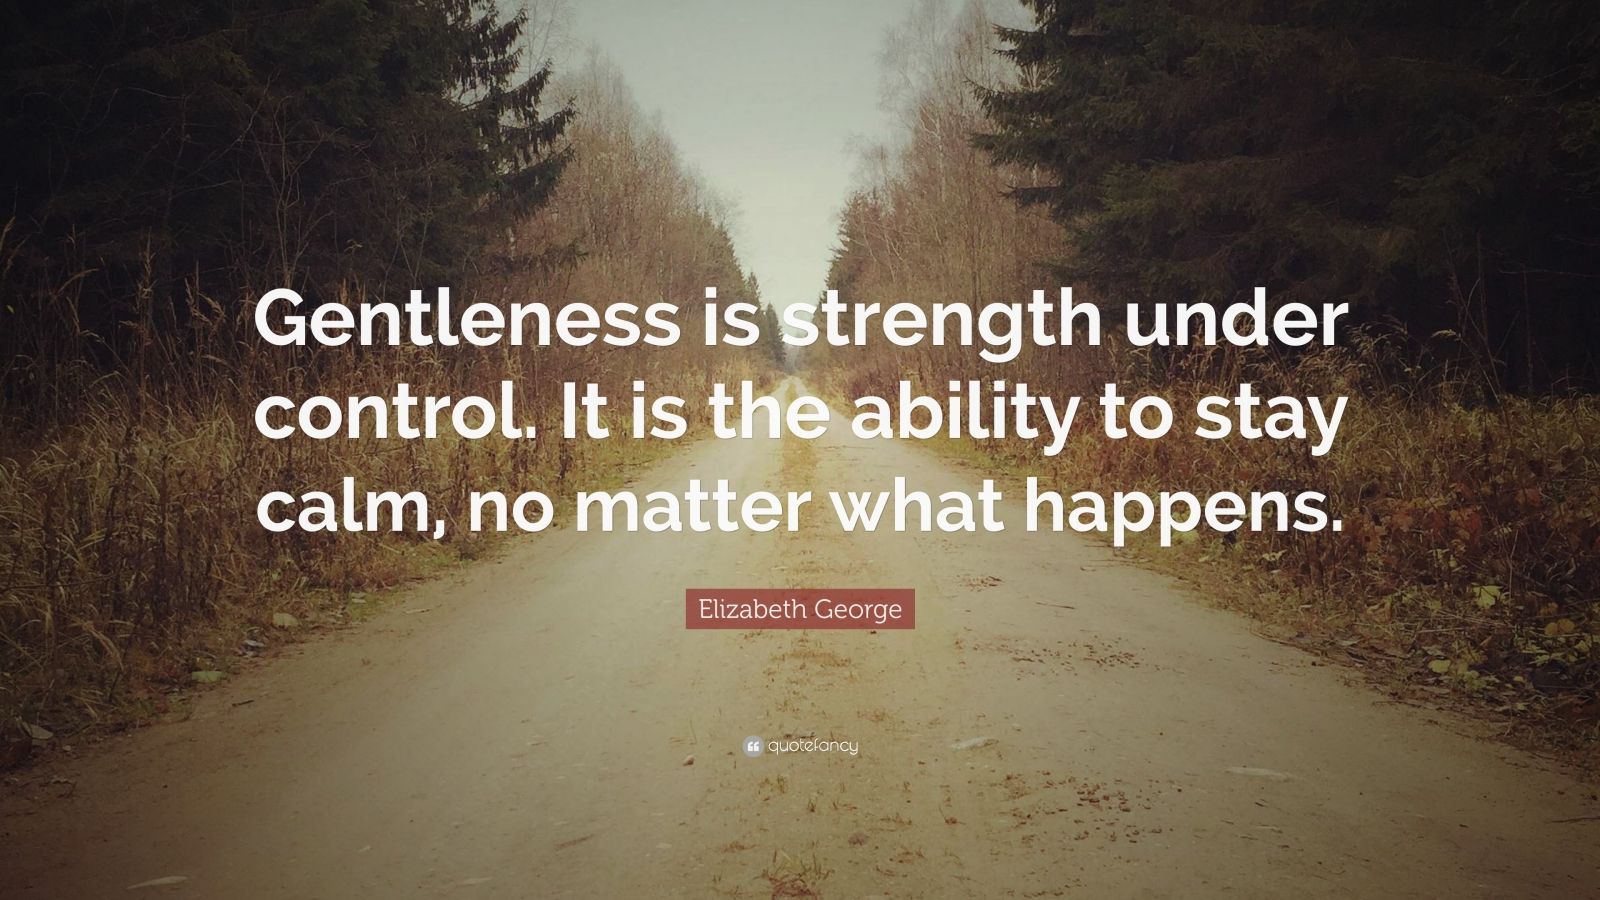 Elizabeth George Quote: “Gentleness is strength under control. It is ...